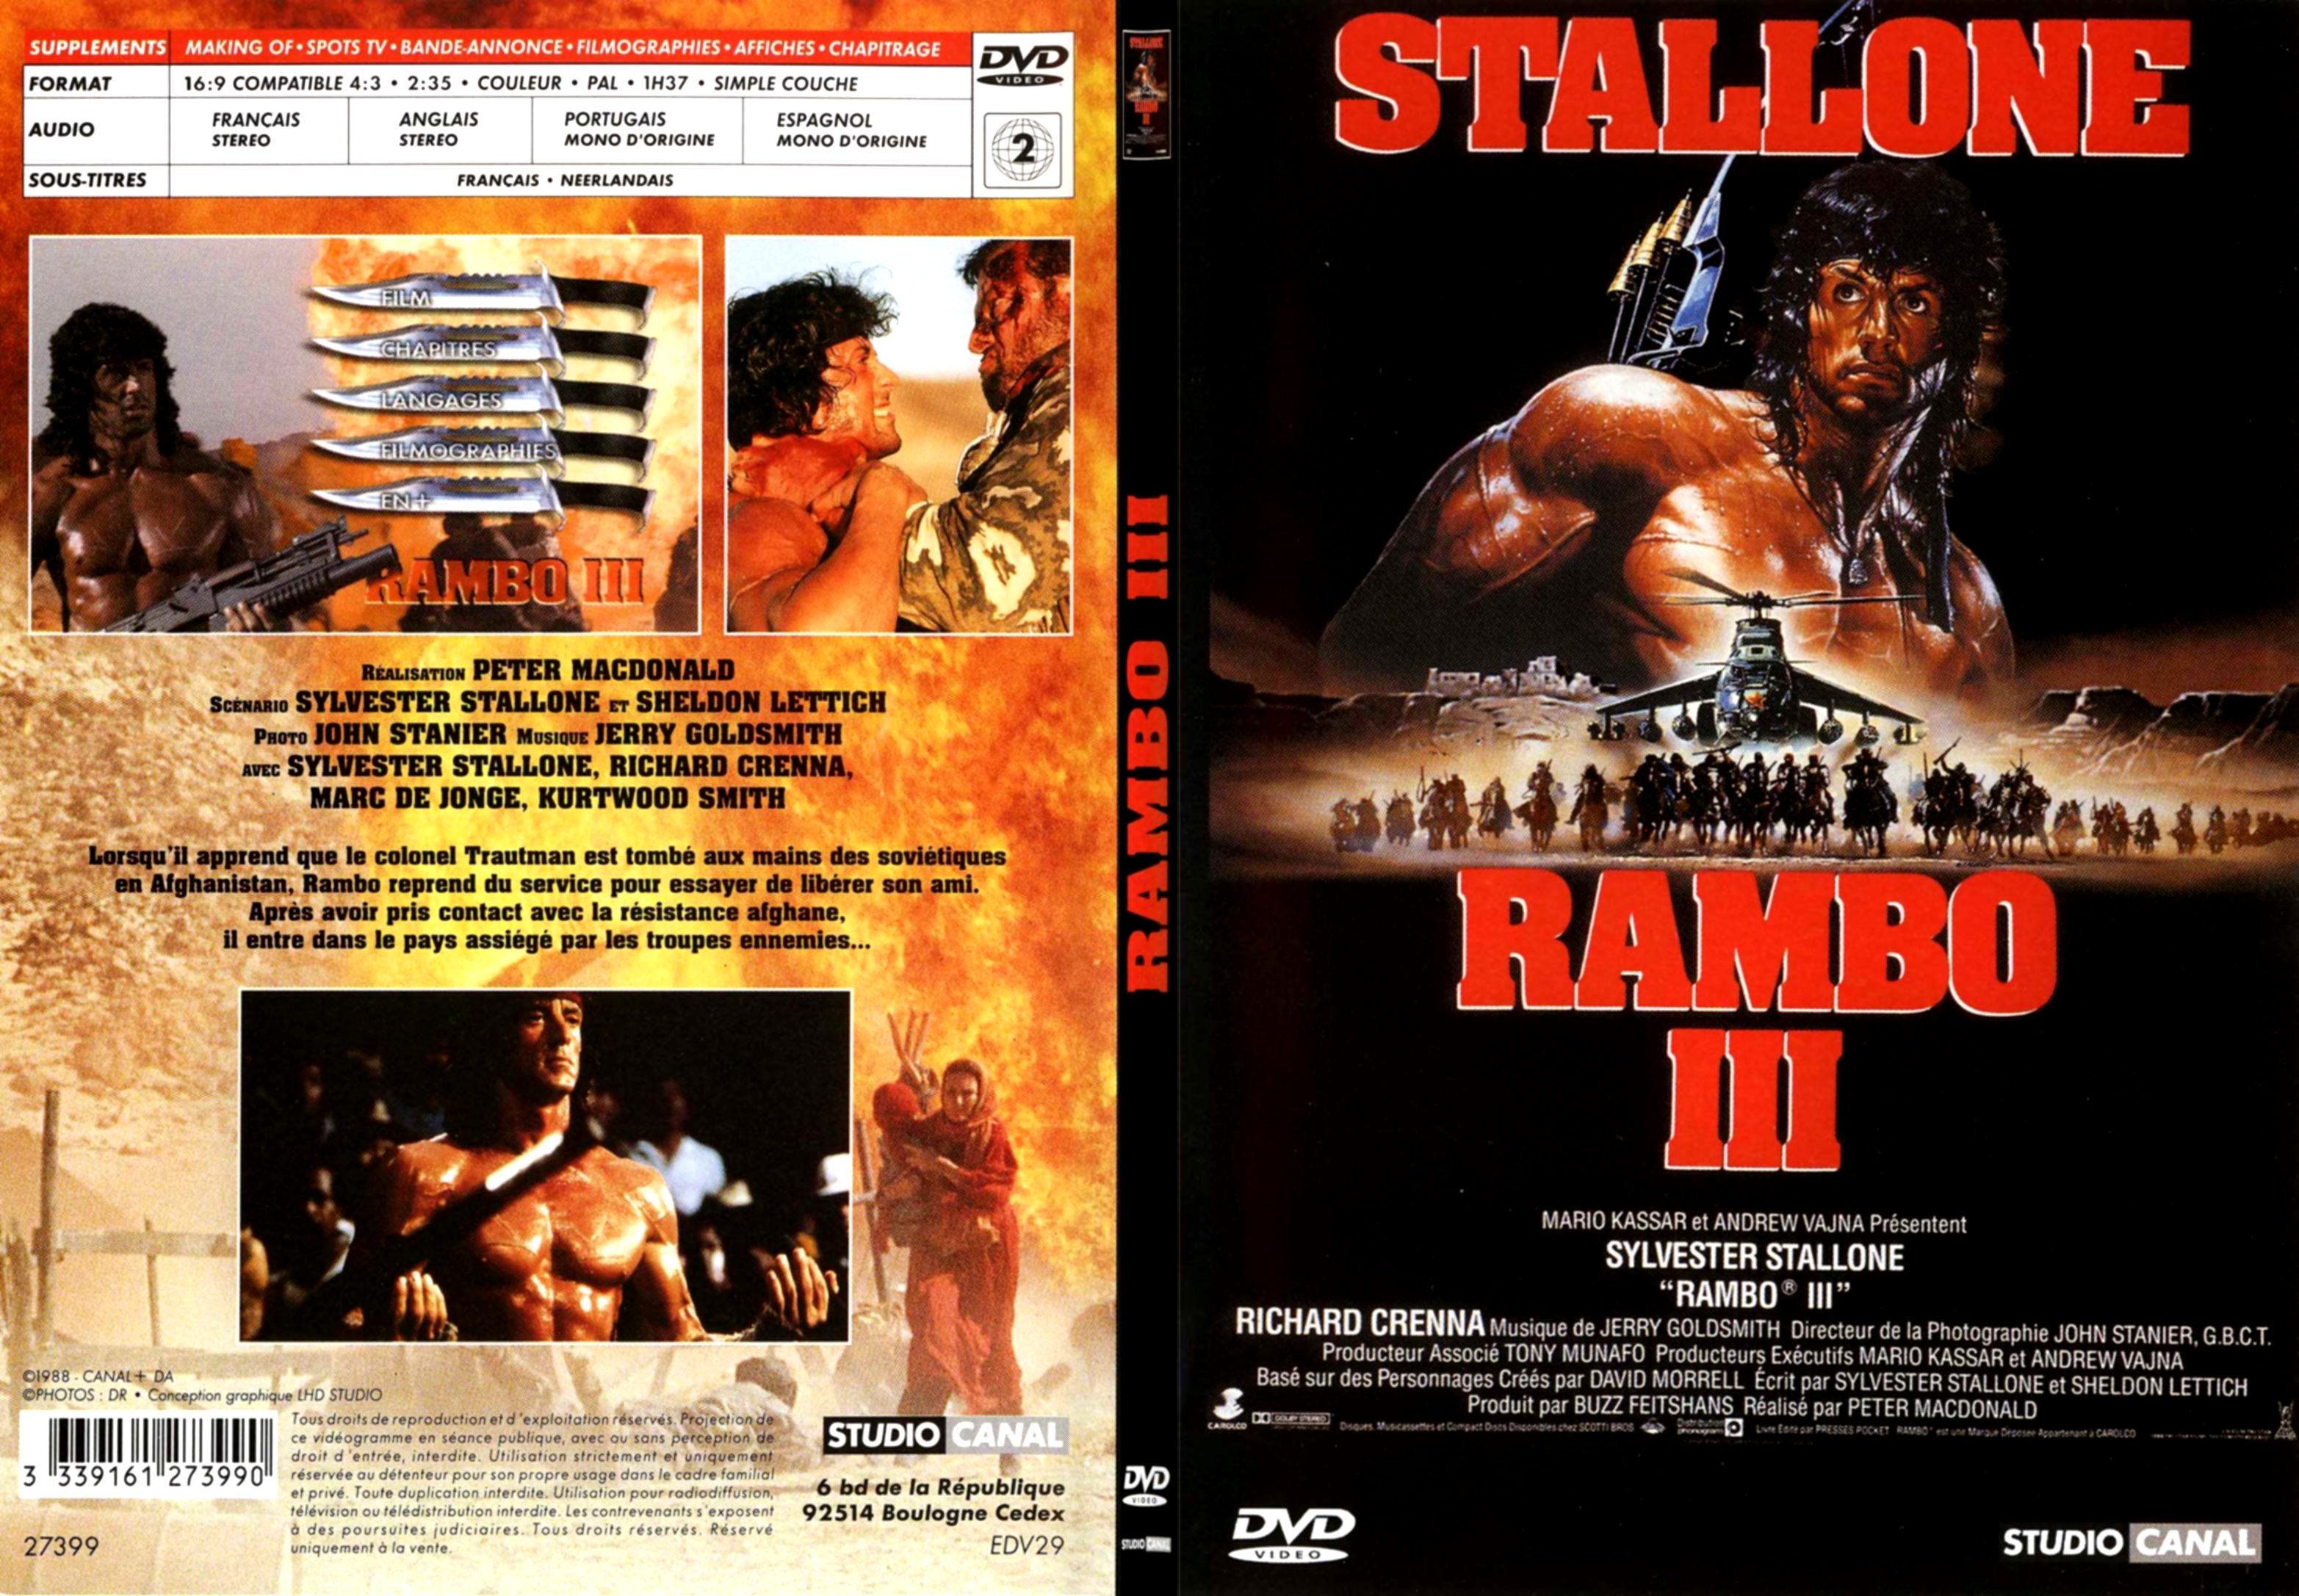 Jaquette DVD Rambo 3 - SLIM